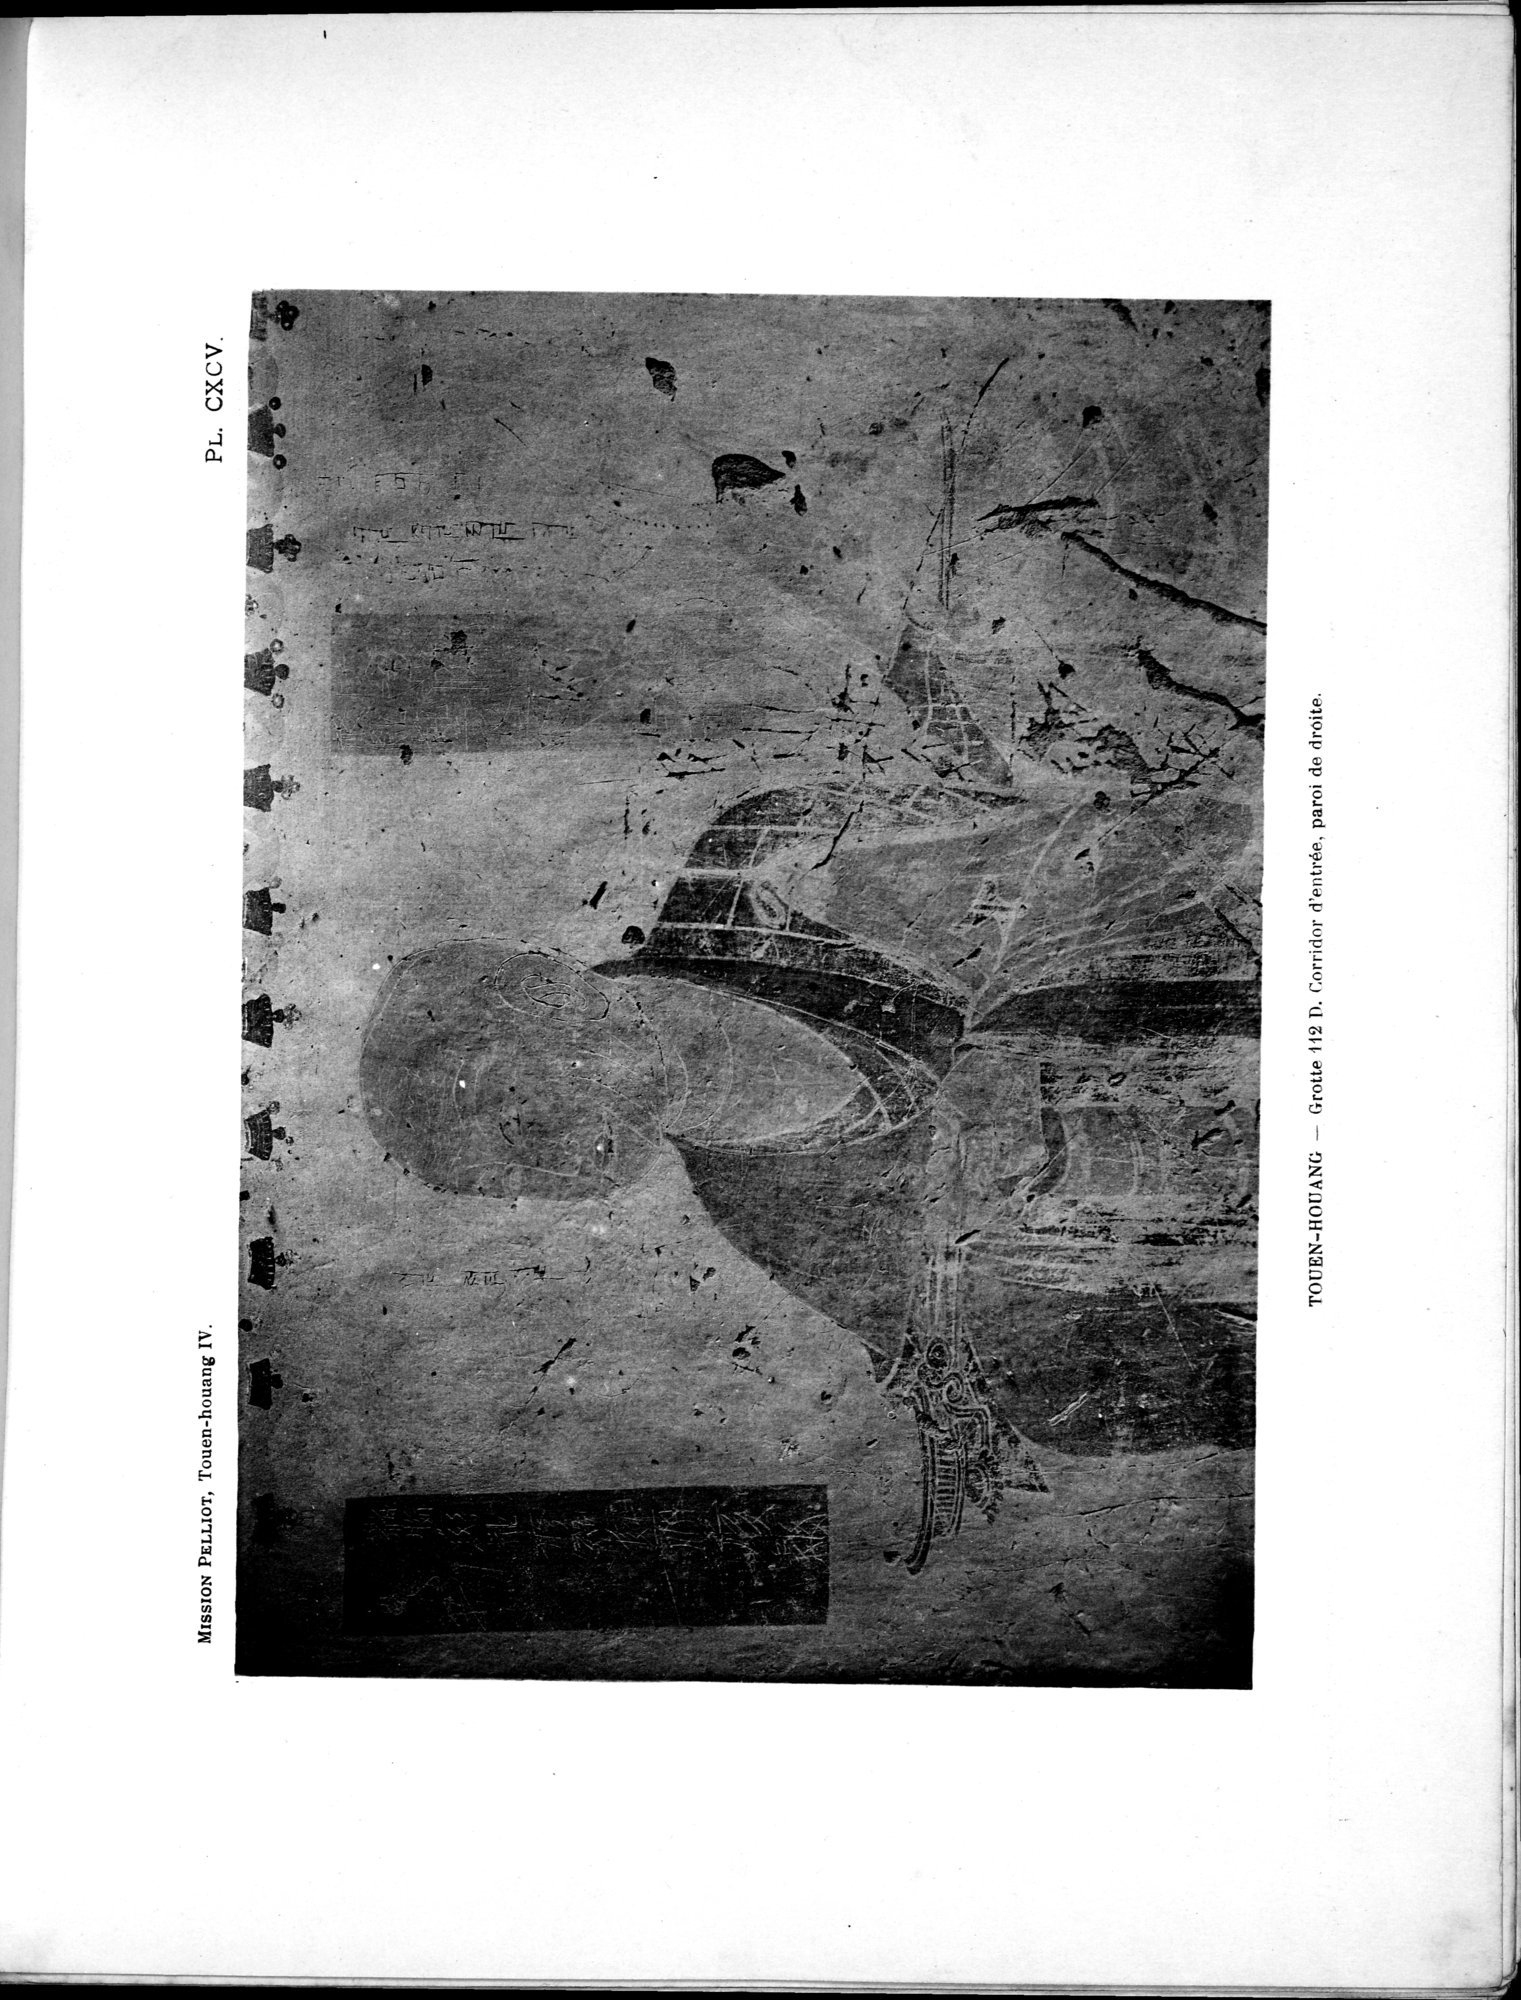 Les grottes de Touen-Houang : vol.4 / Page 15 (Grayscale High Resolution Image)